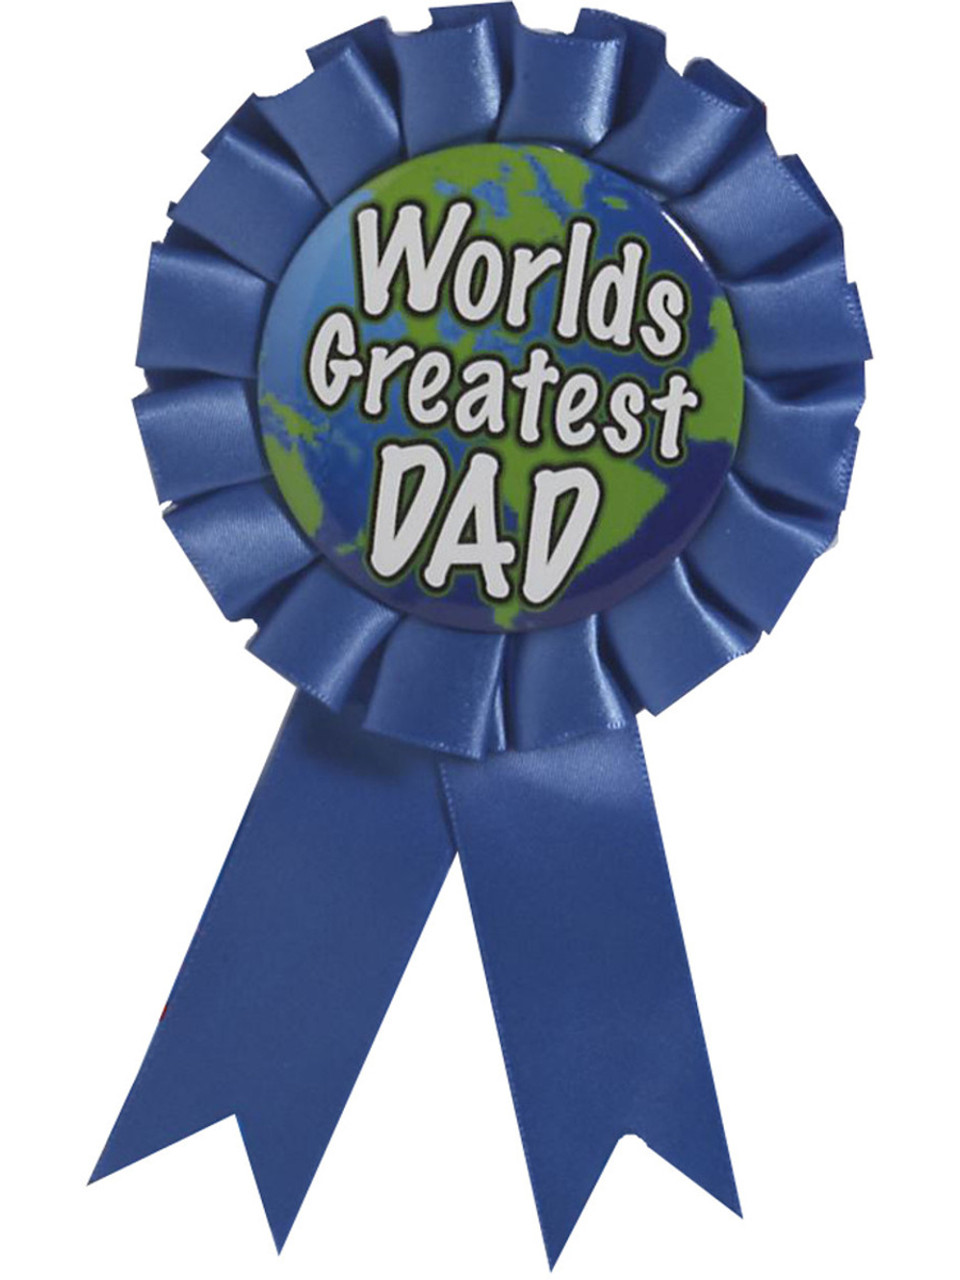 Father's Day Award Ribbon